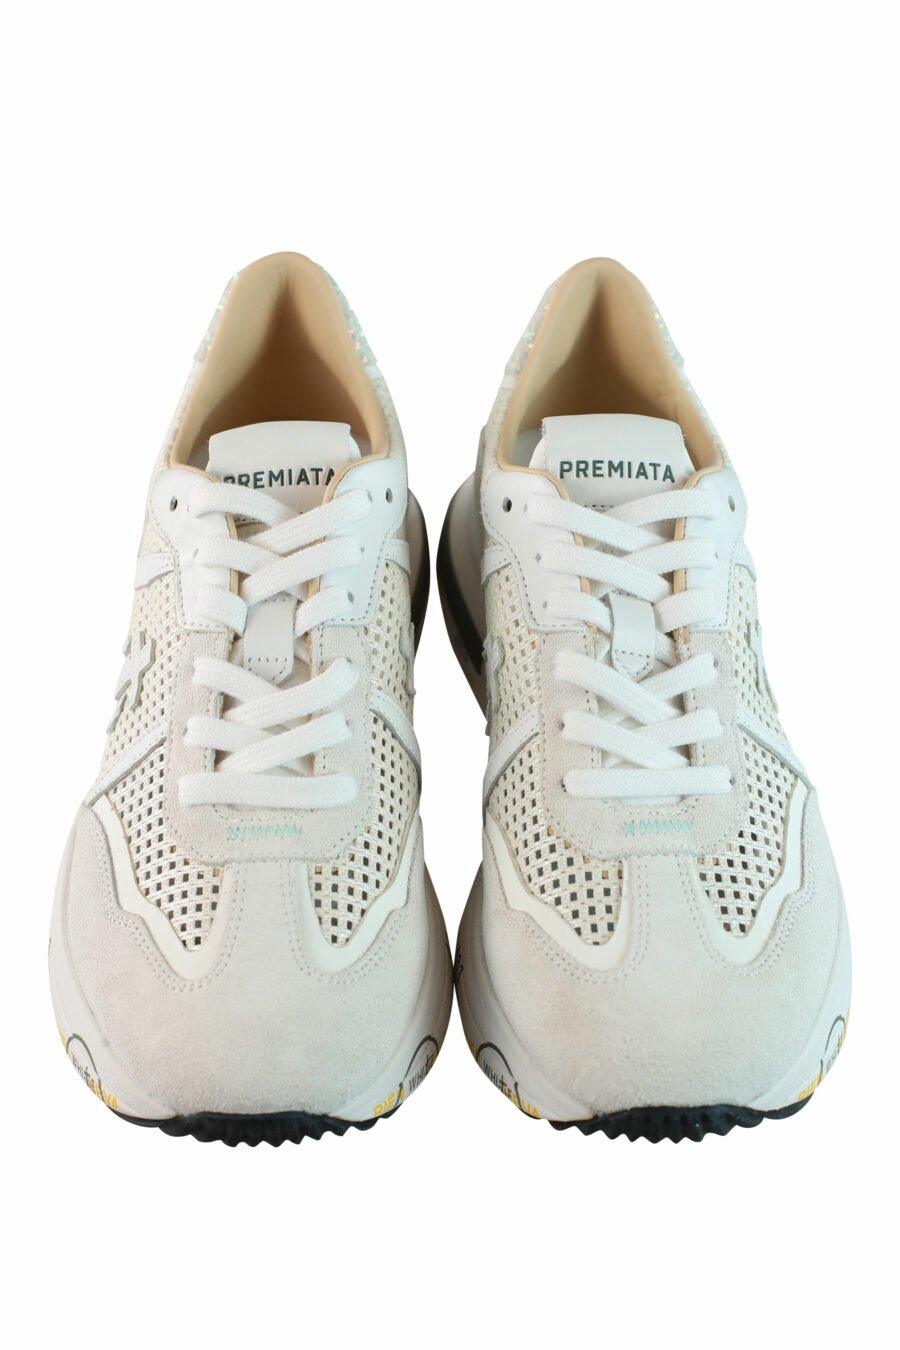 Zapatillas blancas transpirables con purpurina "cassie 6341" - IMG 0837